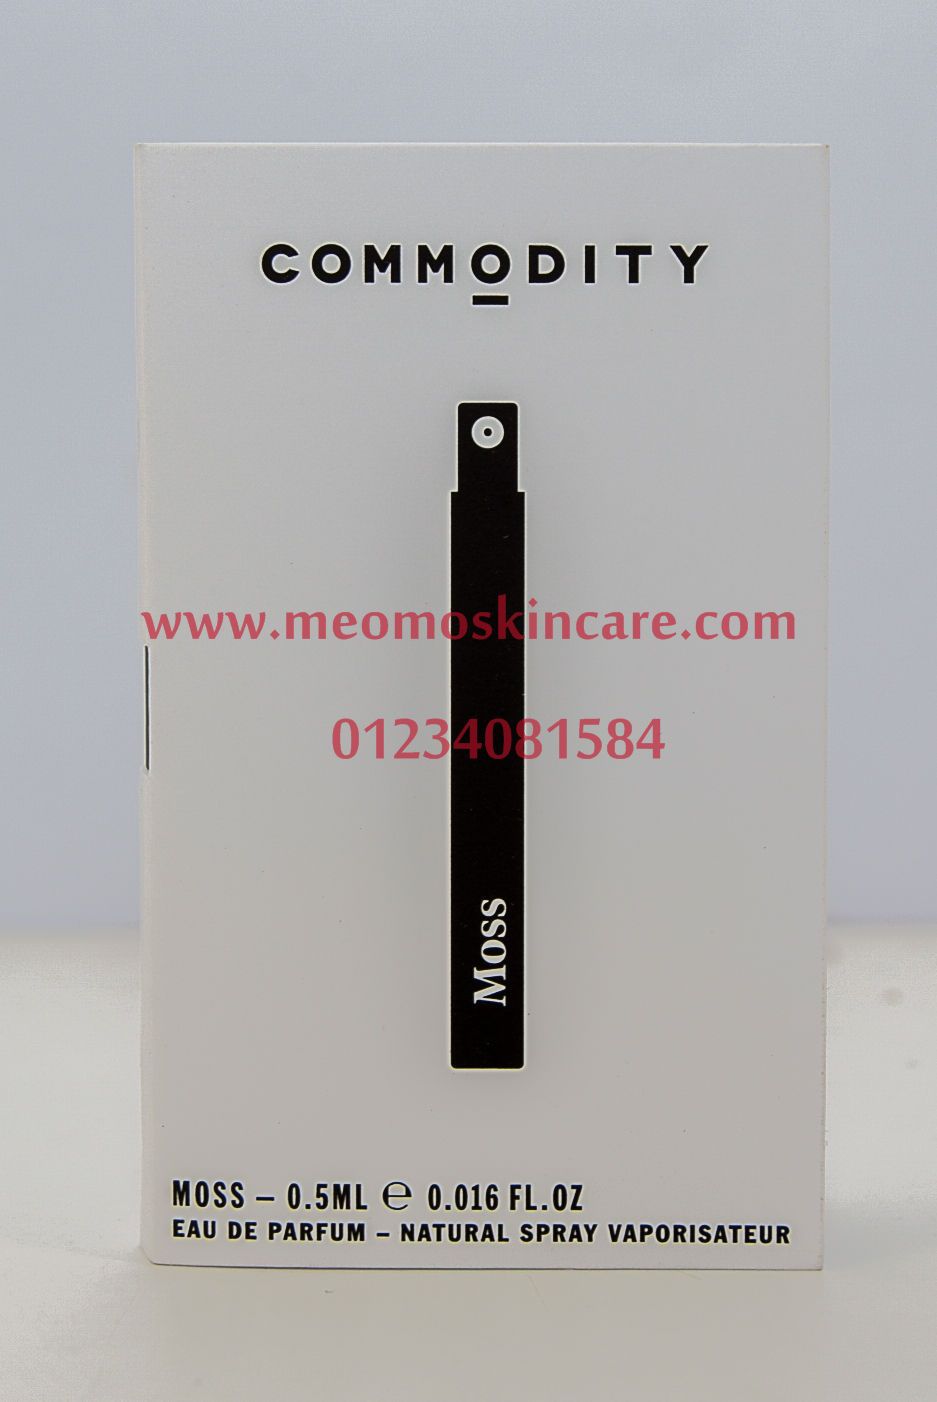 Commodity -  Moss - 0.5ml